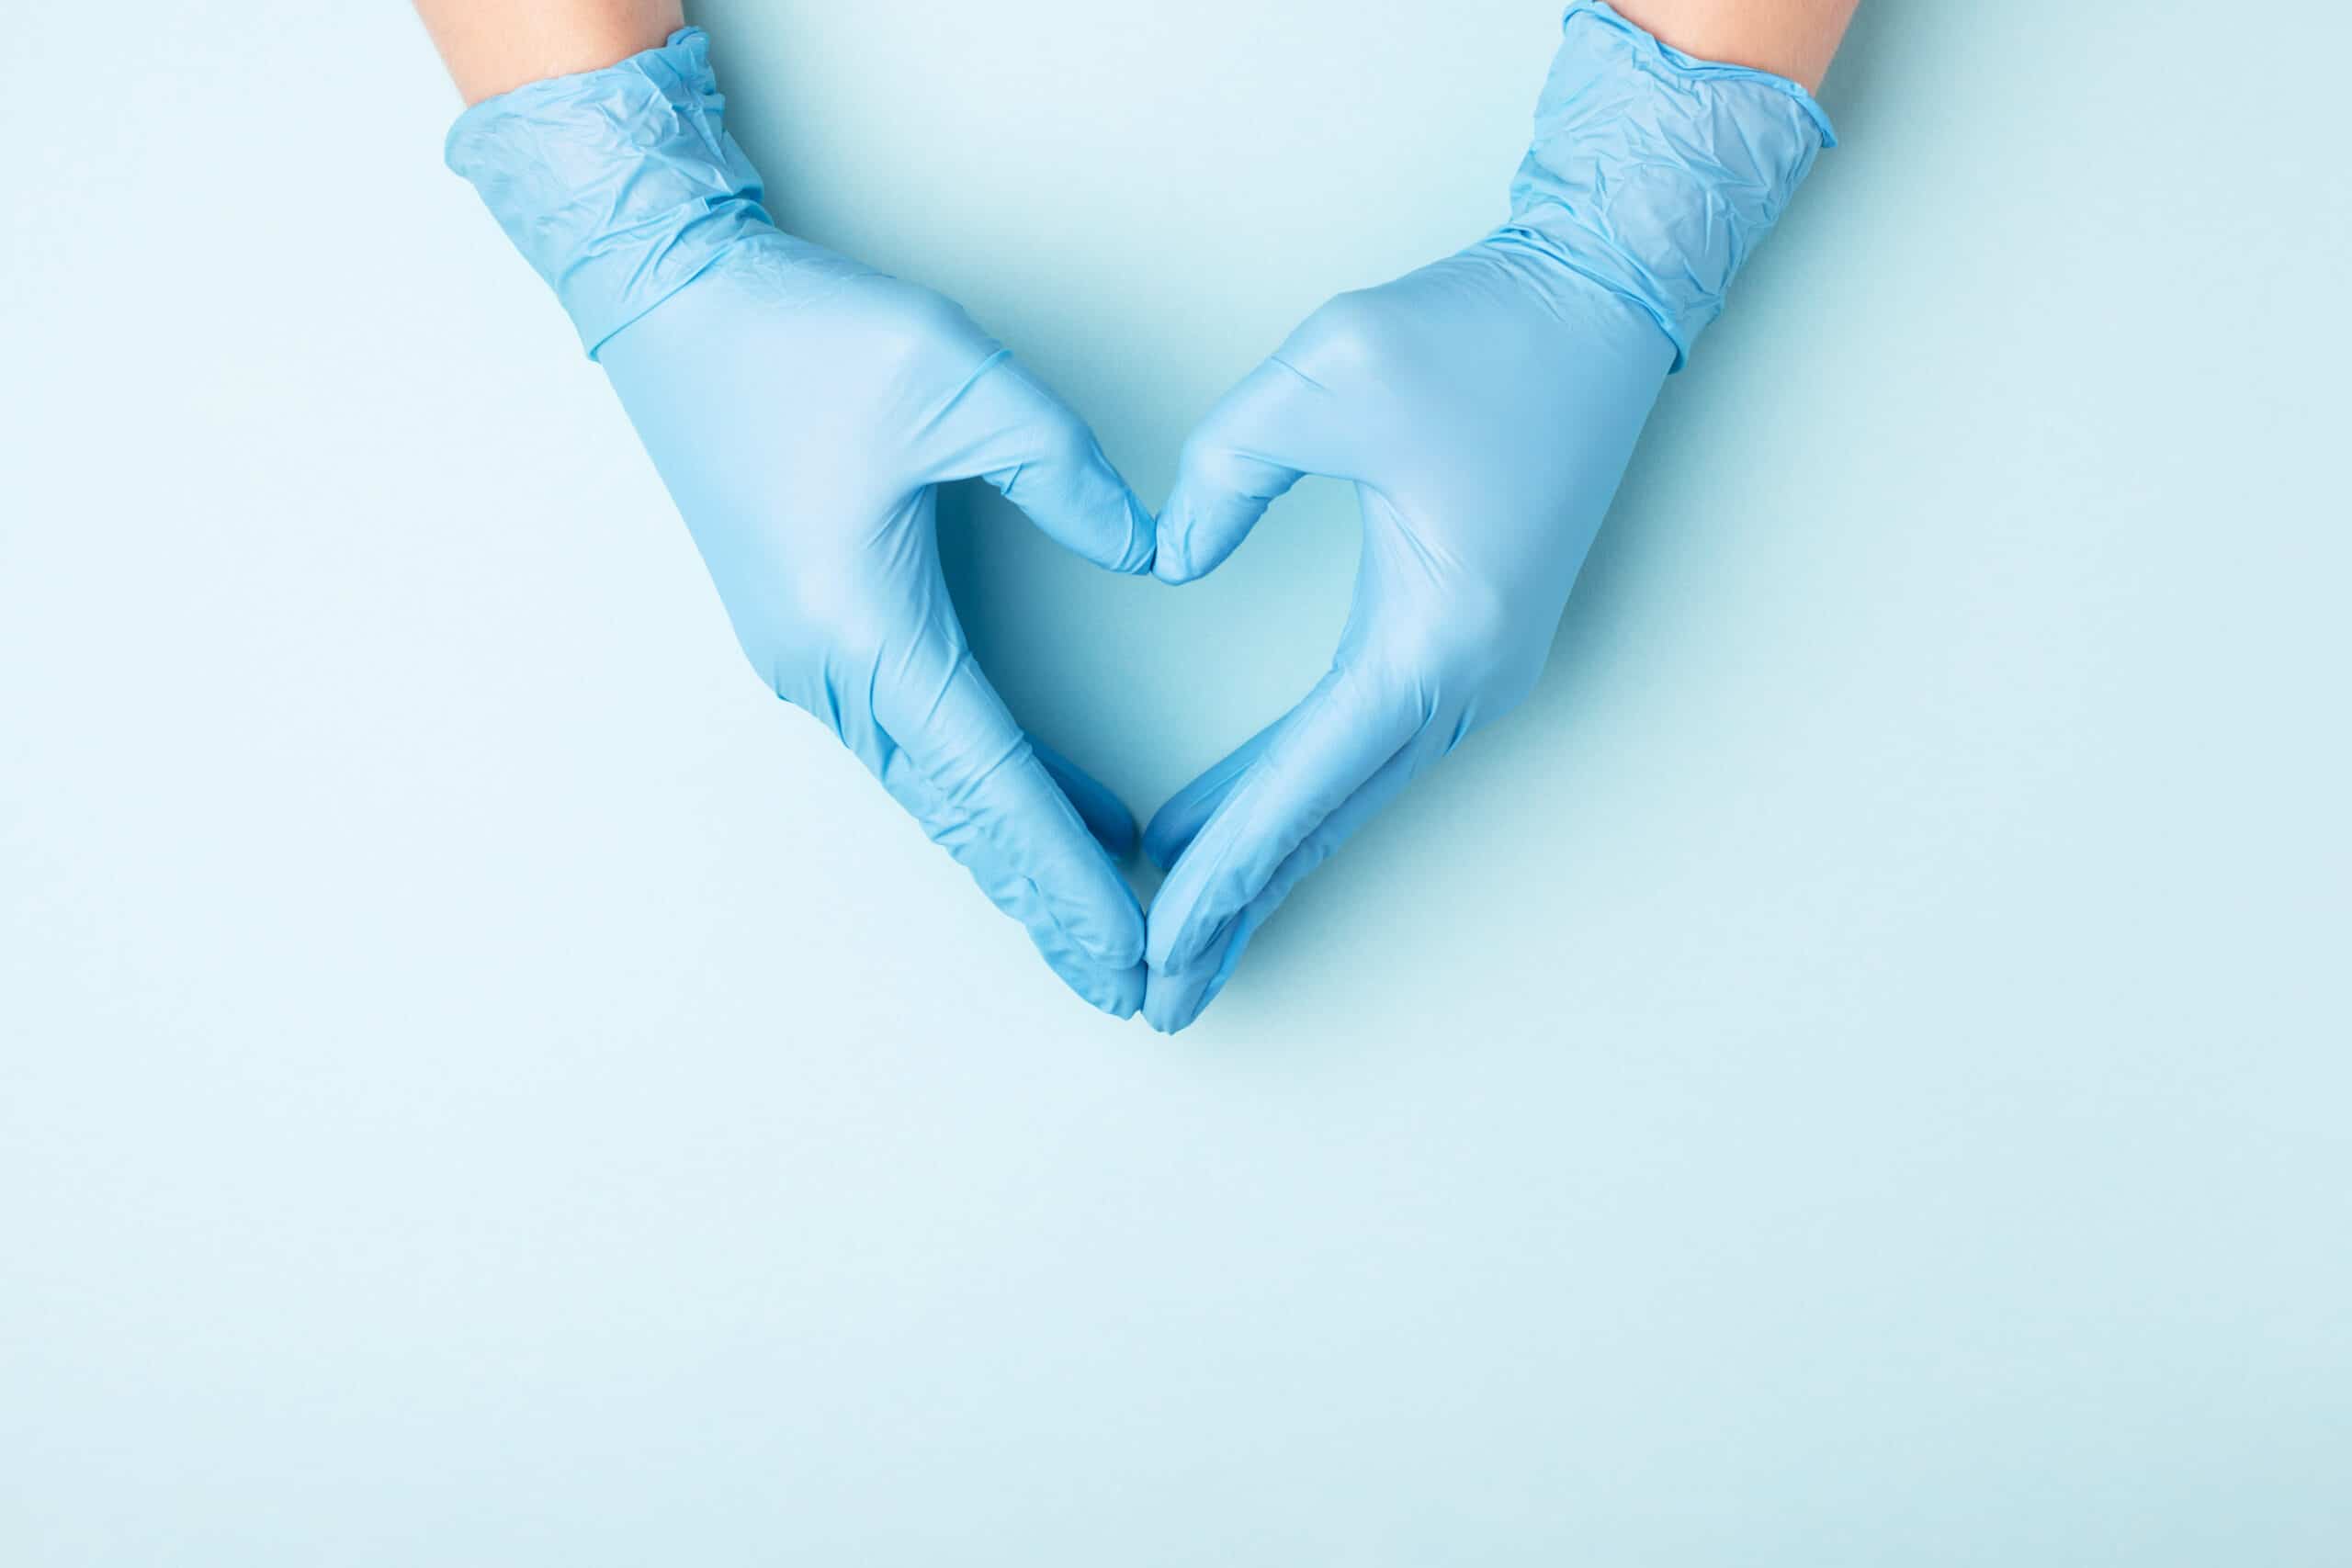 Dermatologist's hands in medical gloves in shape of heart